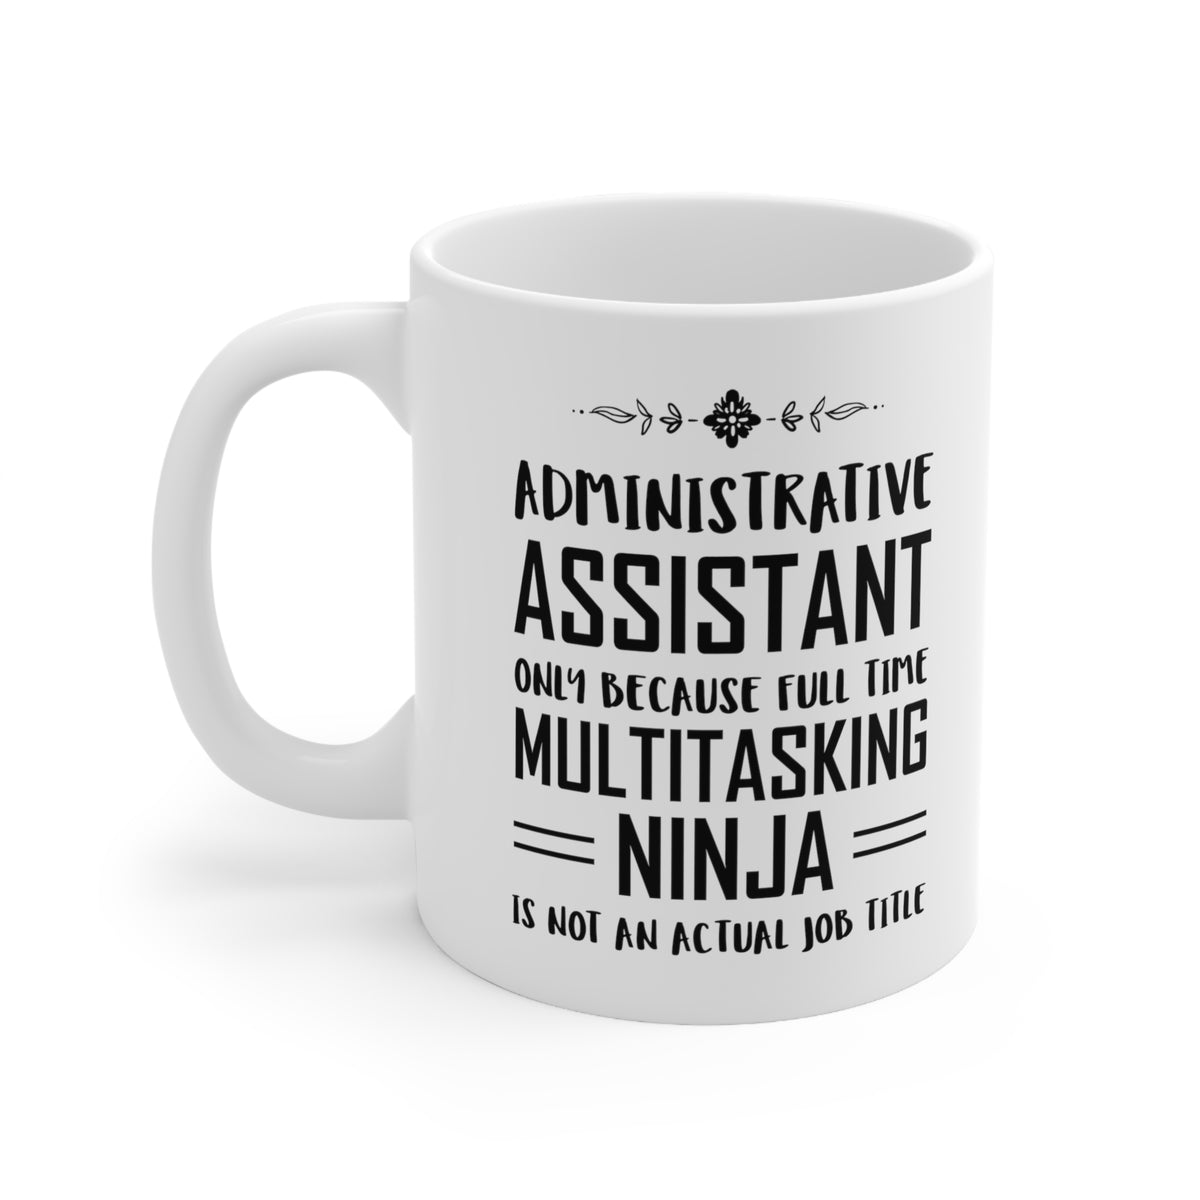 Admin Assistant Gifts For Women Men - Administrative Professionals Day Coffee Mug - Administrator Full Time Multitasking Ninja - Christmas Birthday Present For Men Women Coworker Boss